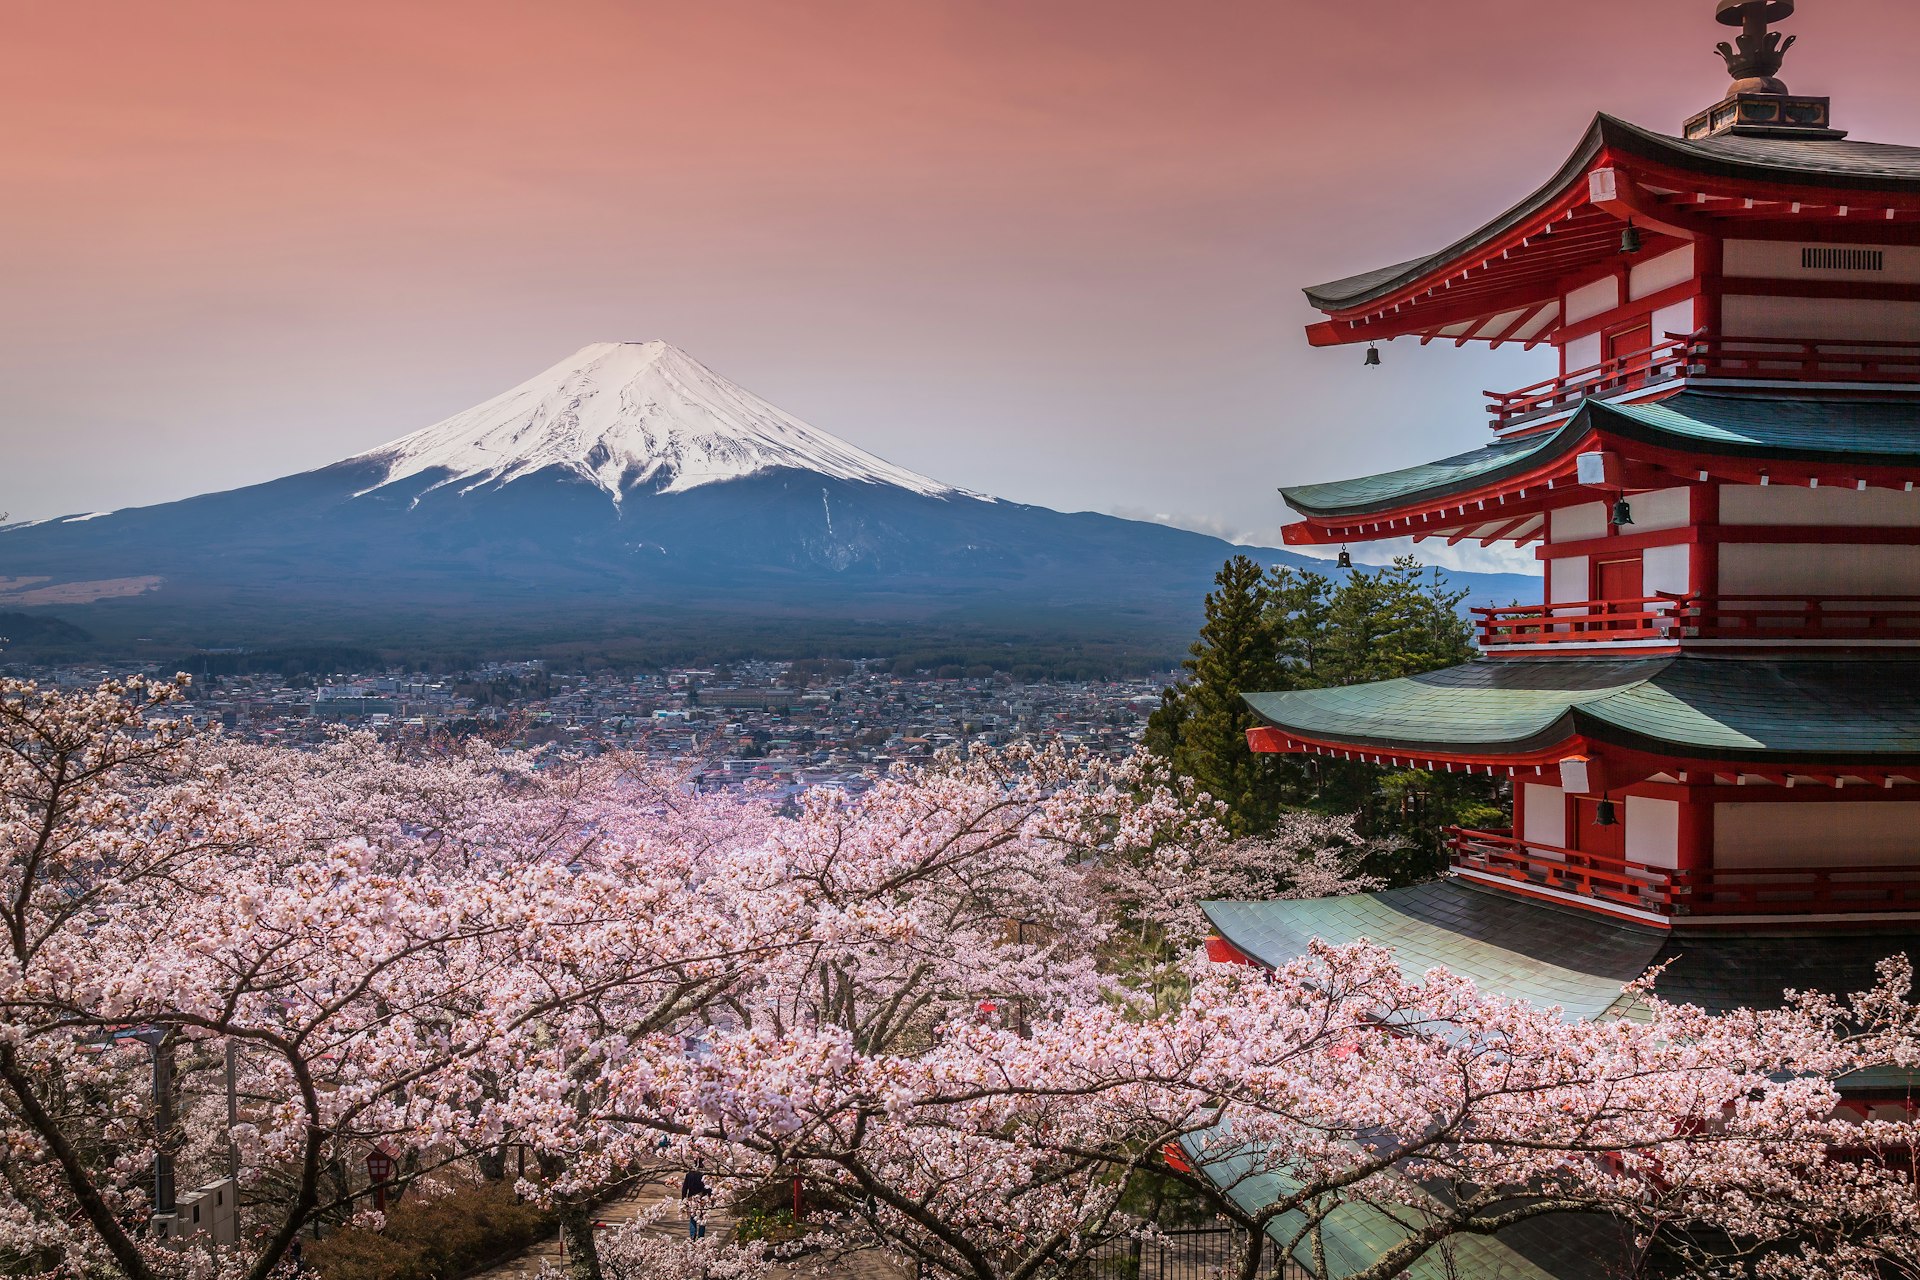 Chureito Pagoda with Sakura and Mt. Fuji in the background